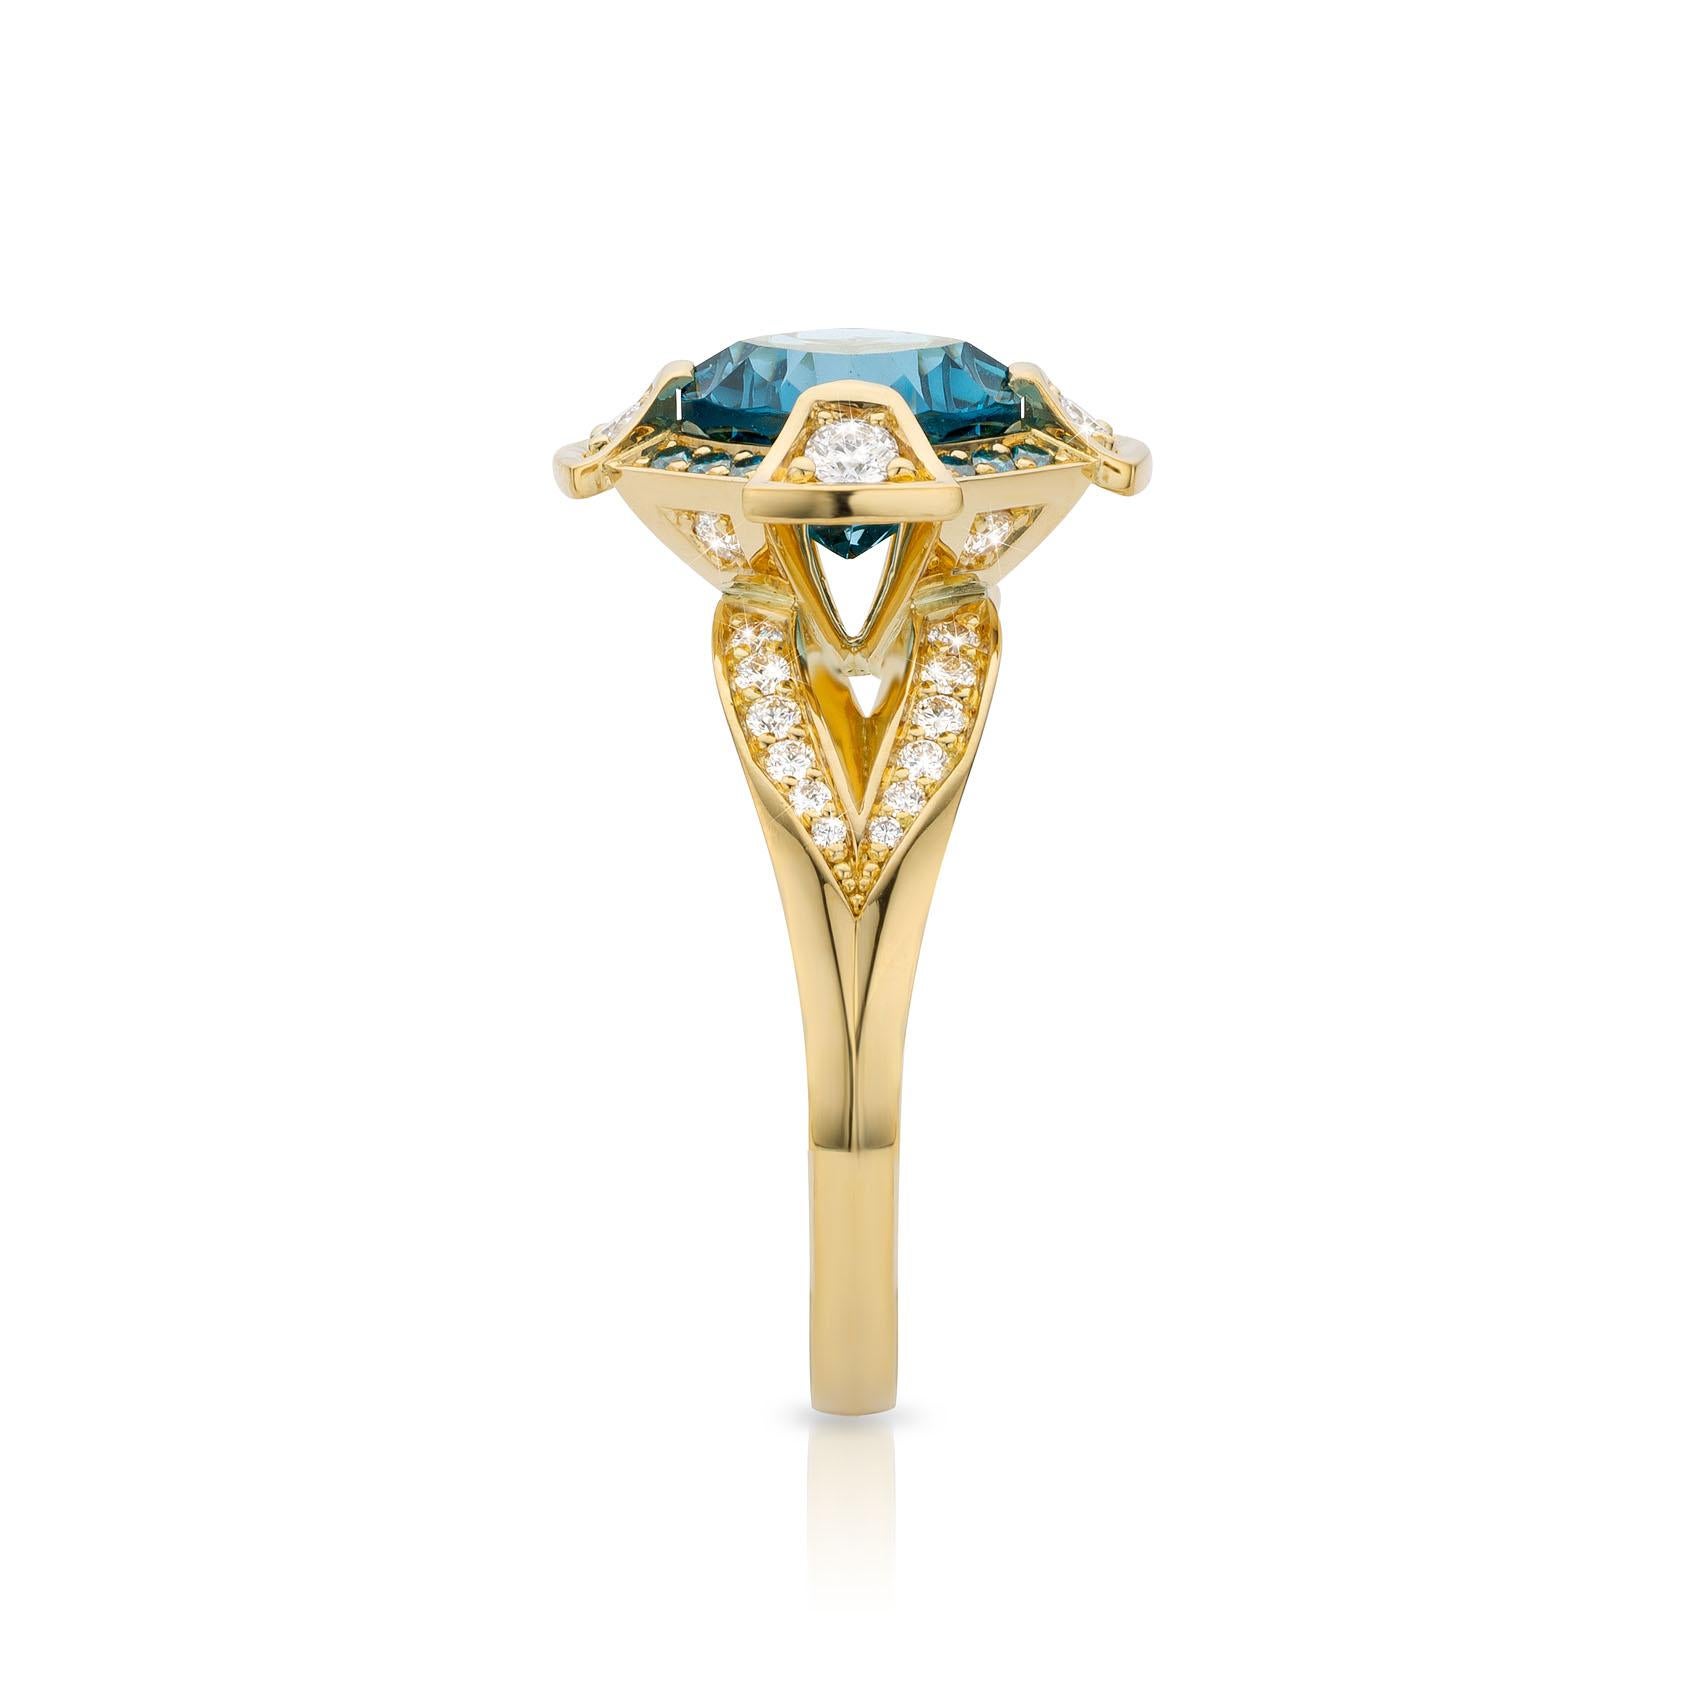 Brilliant Cut Cober “Tropical Blue” Topaz 12 blue Diamonds 24 Pavé Diamonds Yellow Gold Ring For Sale